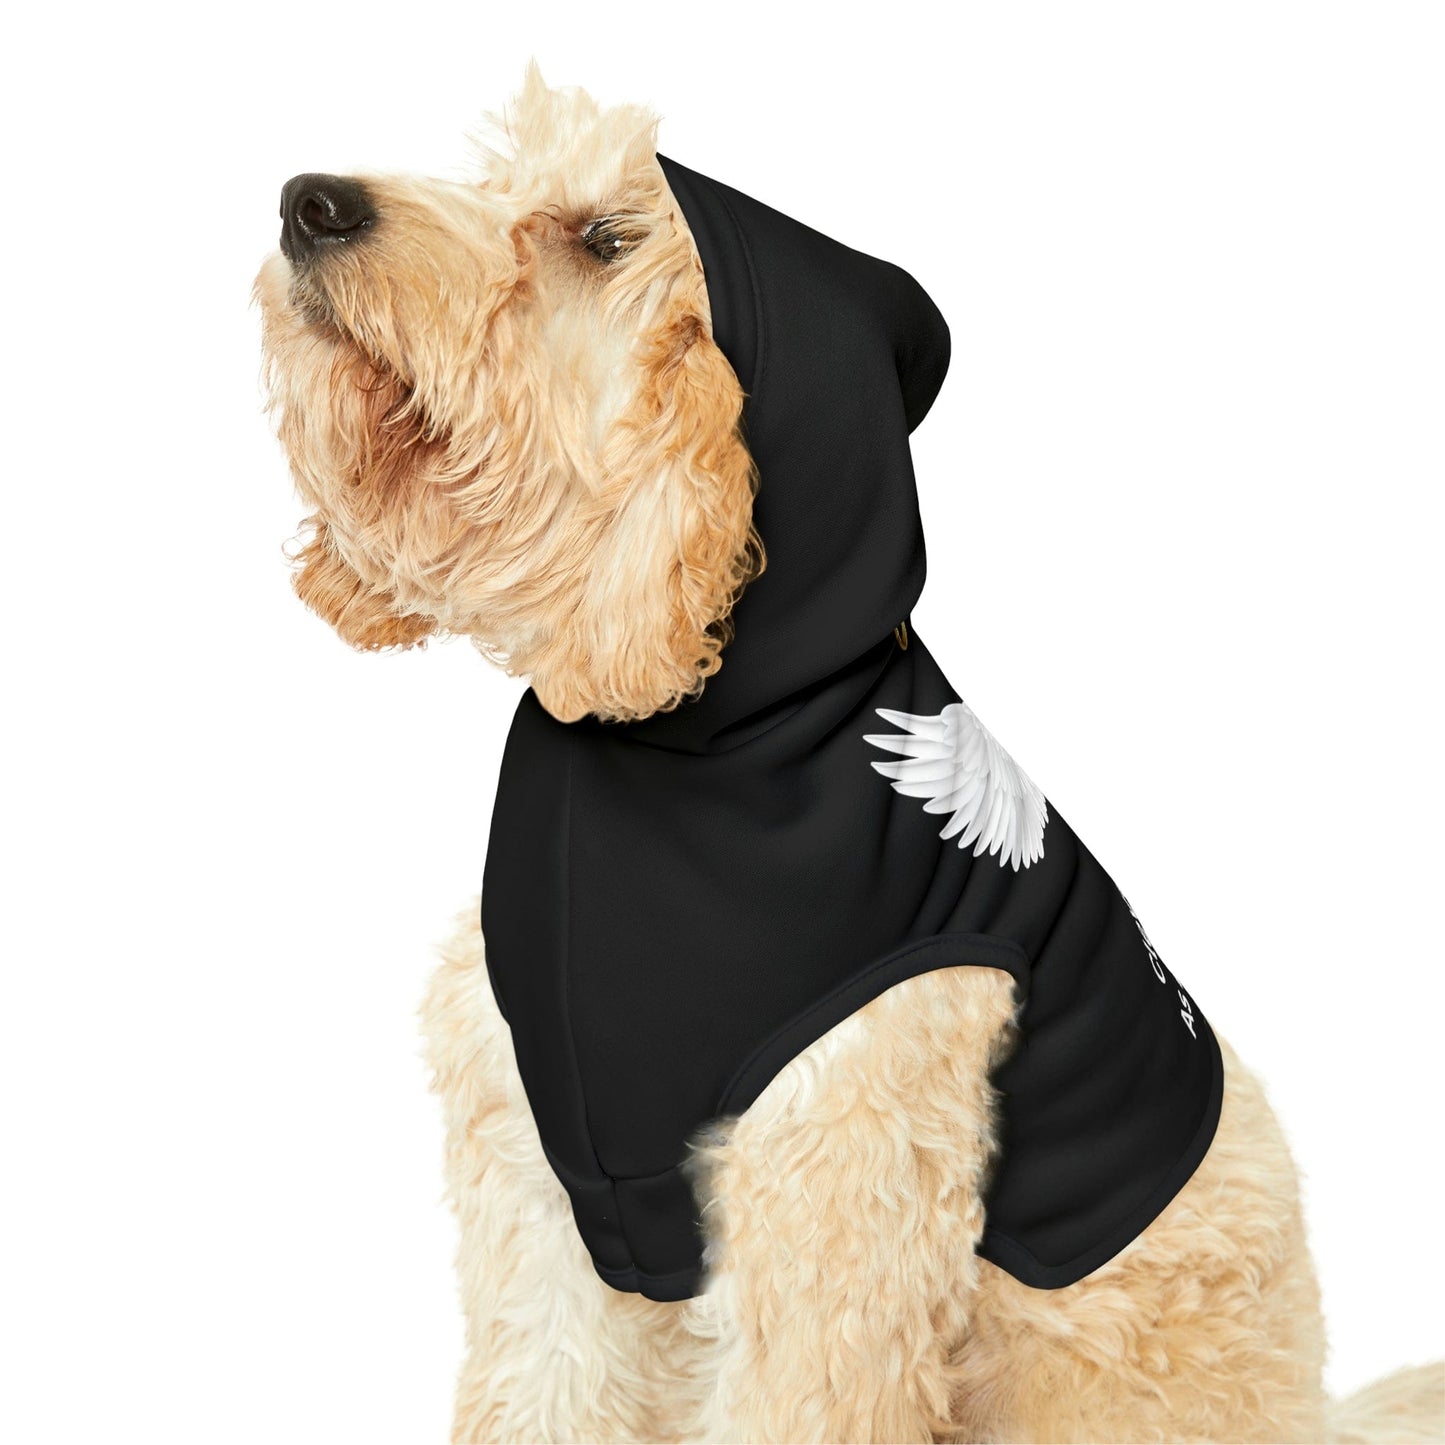 Personalized Dog Hoodie-Dog Angel Sweatshirt-Dog Clothes-Puppy Clothes-Funny Dog Shirt-Personalized Dog Clothes Gift